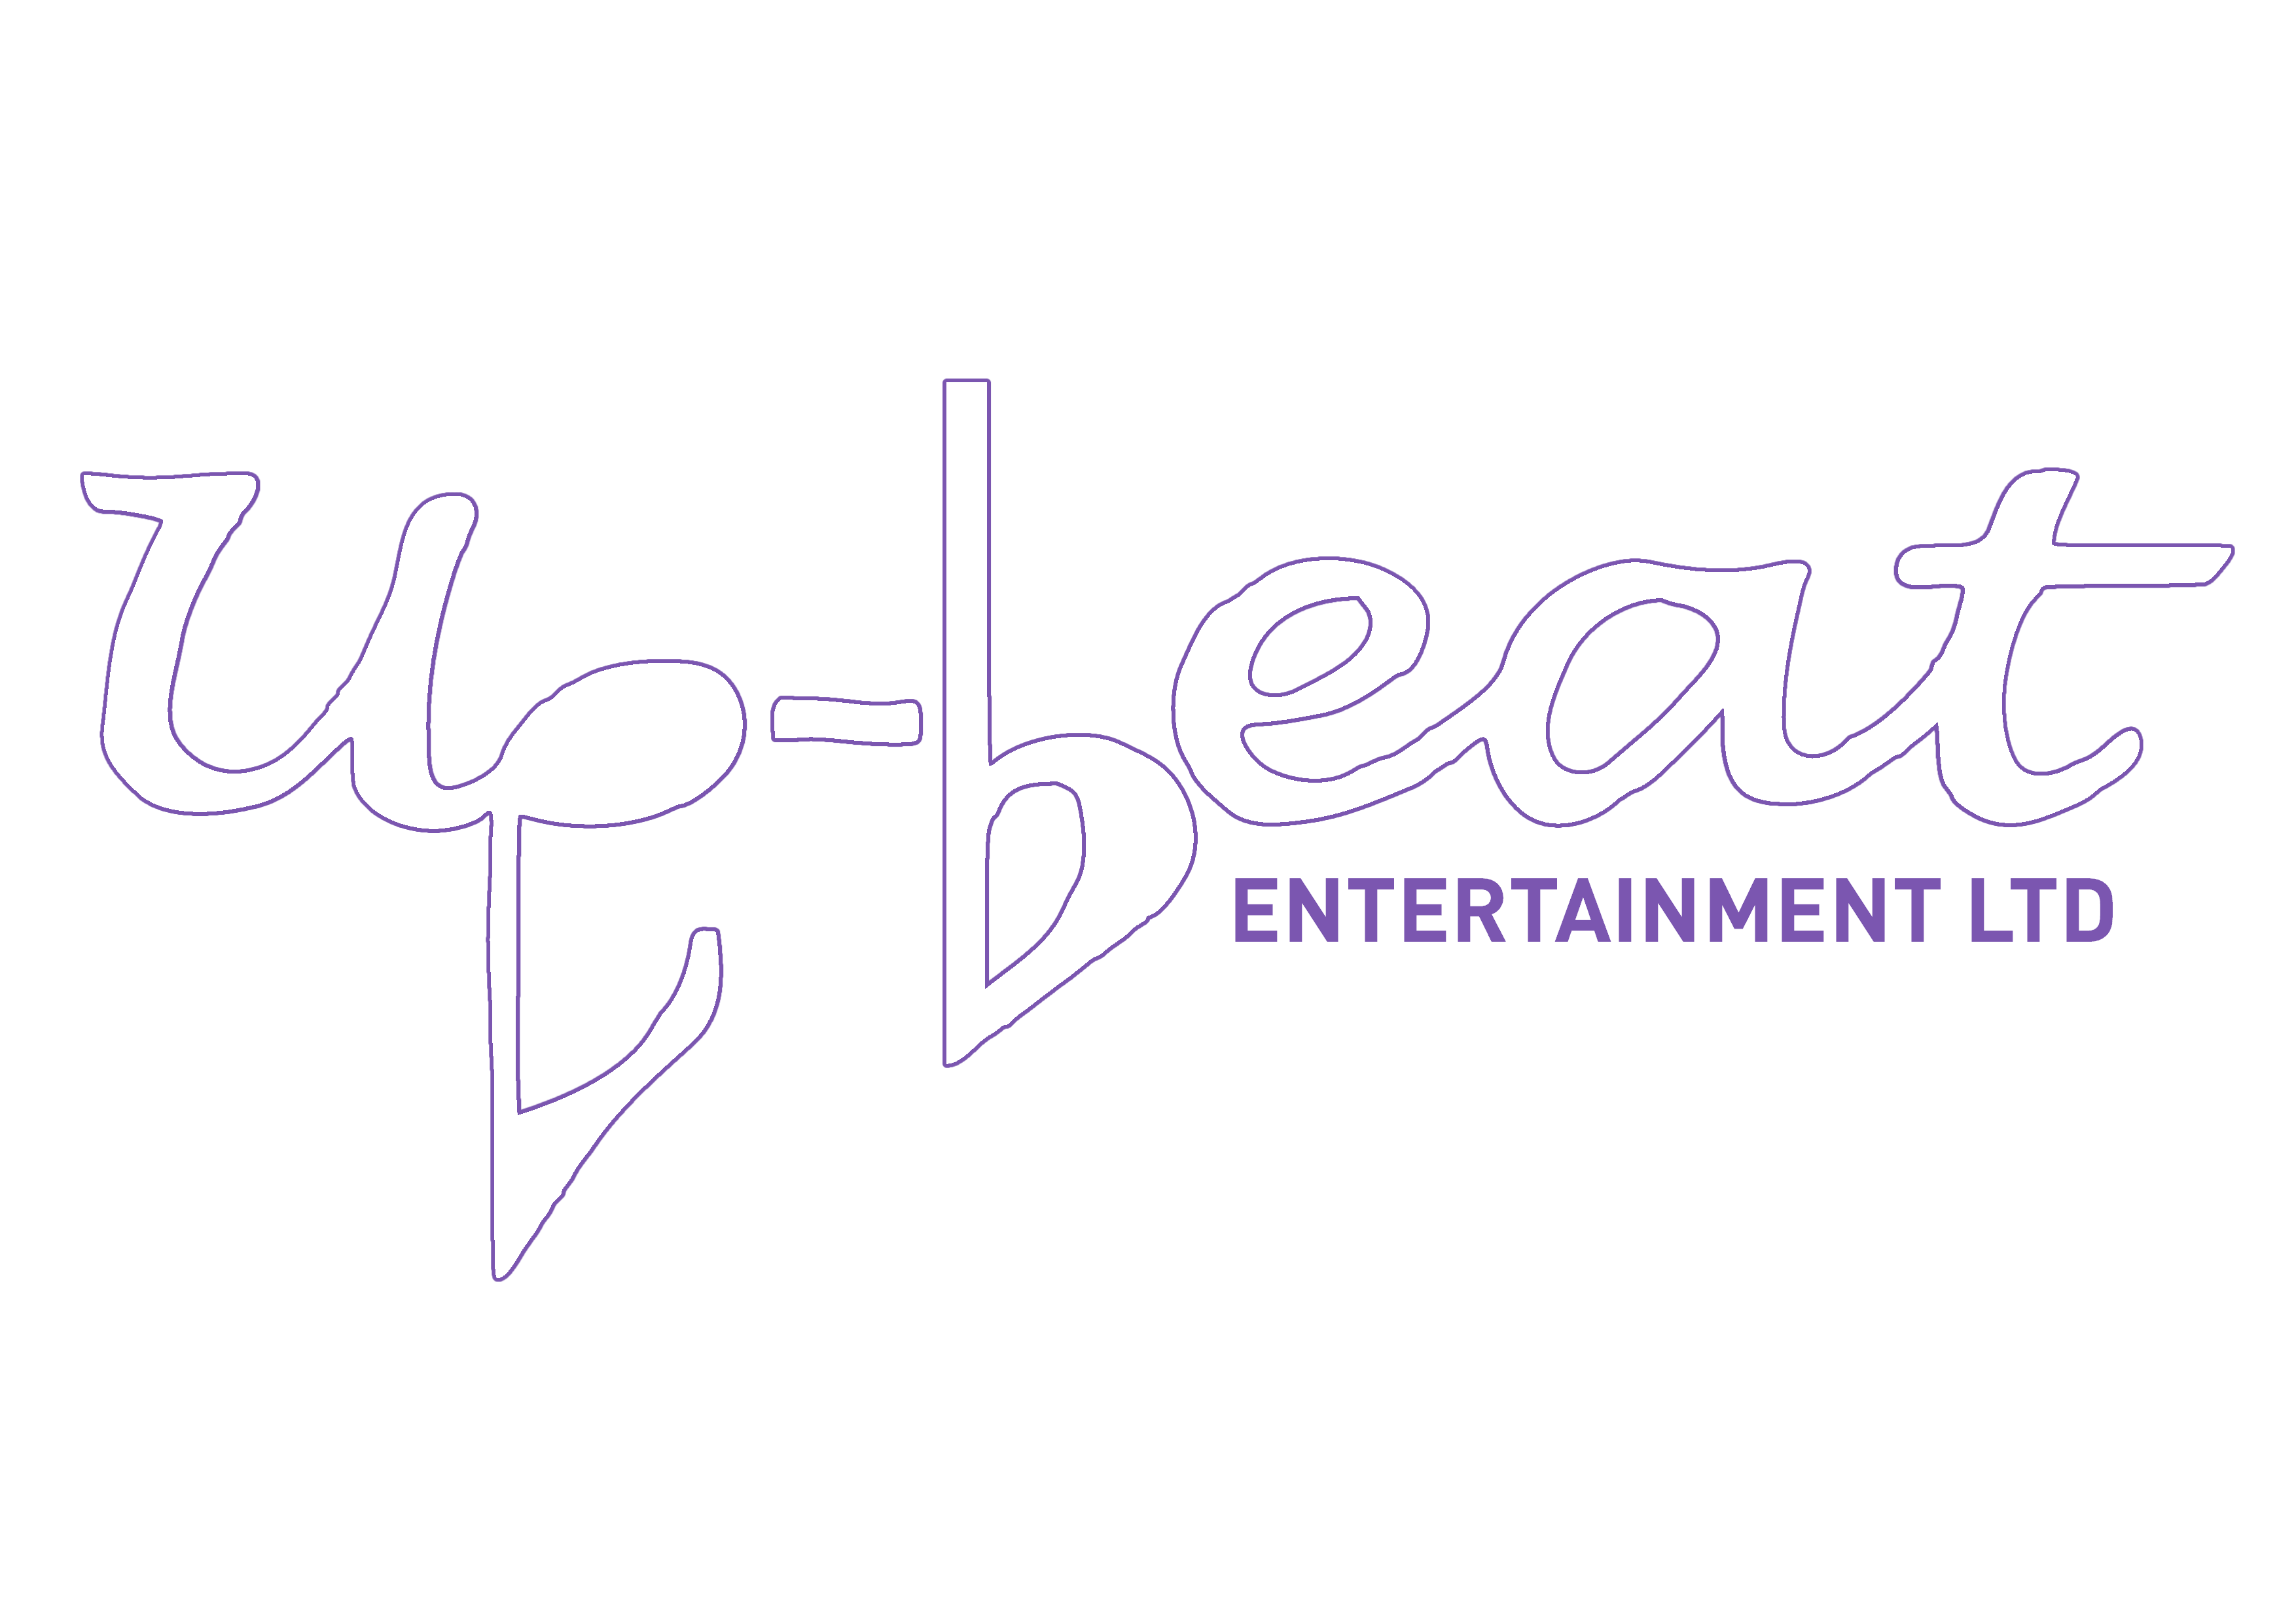 Up Beat Entertainment Ltd